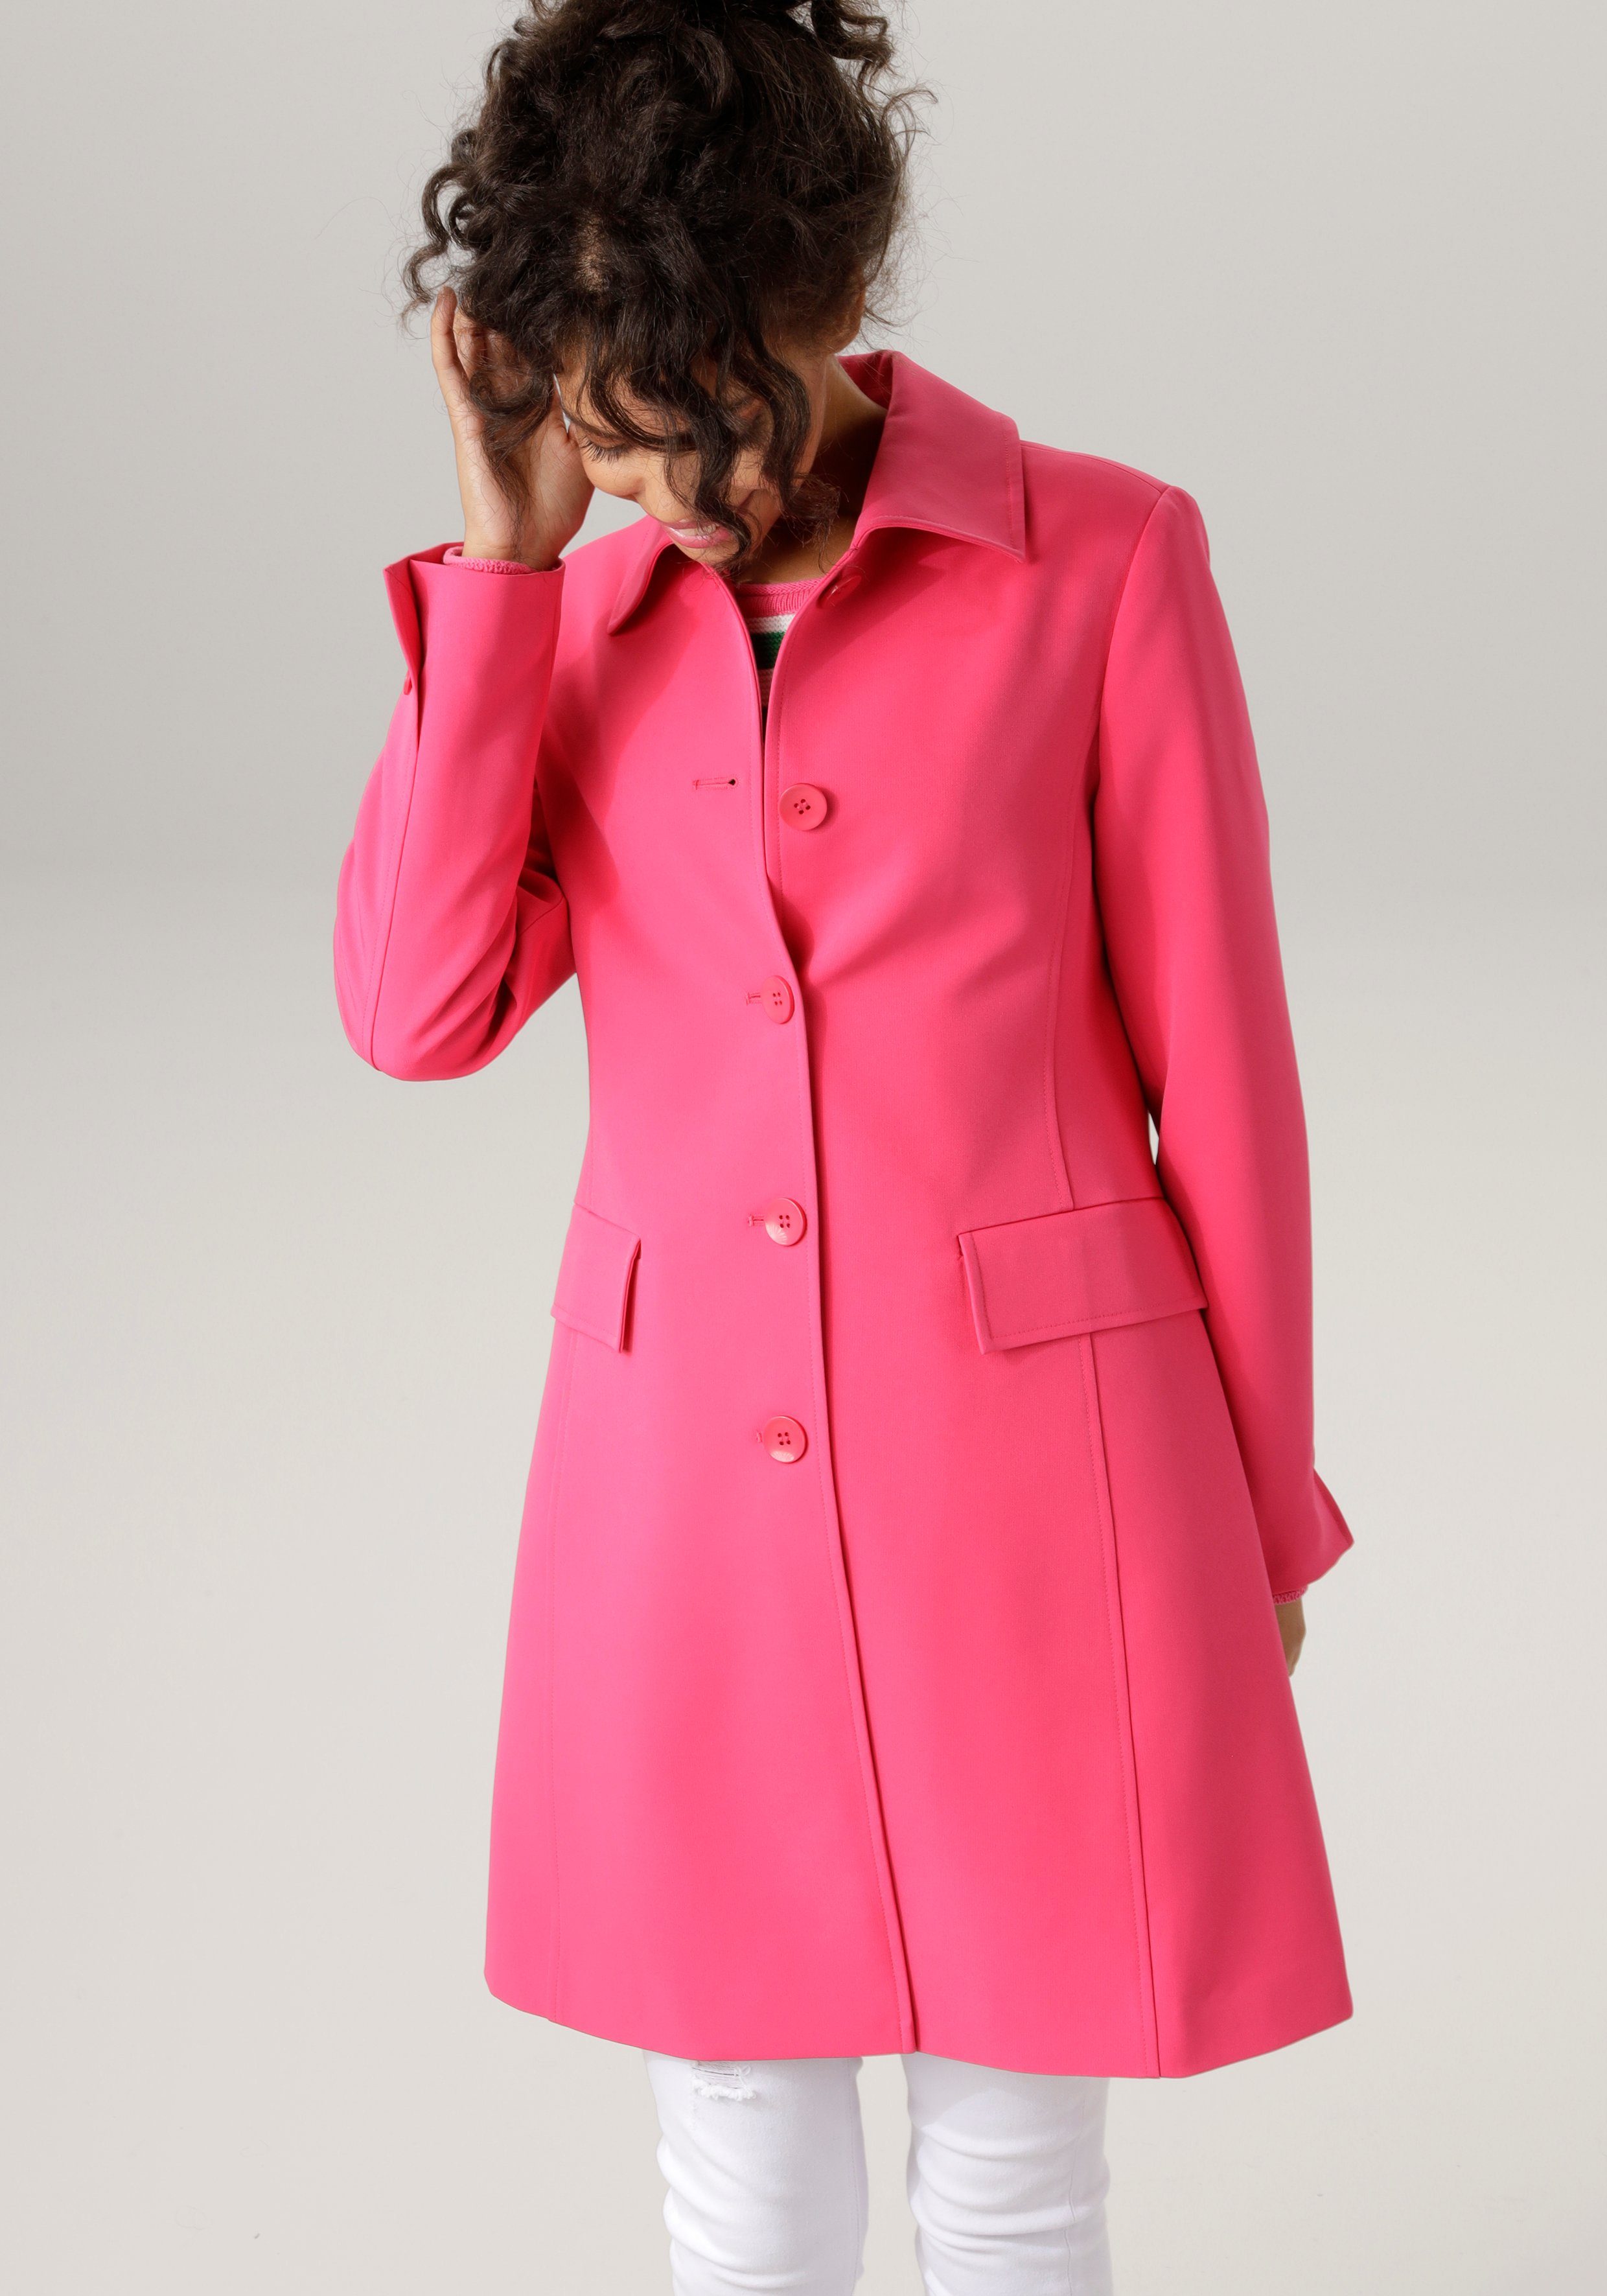 CASUAL Knallfarben Aniston in Kurzmantel trendigen pink